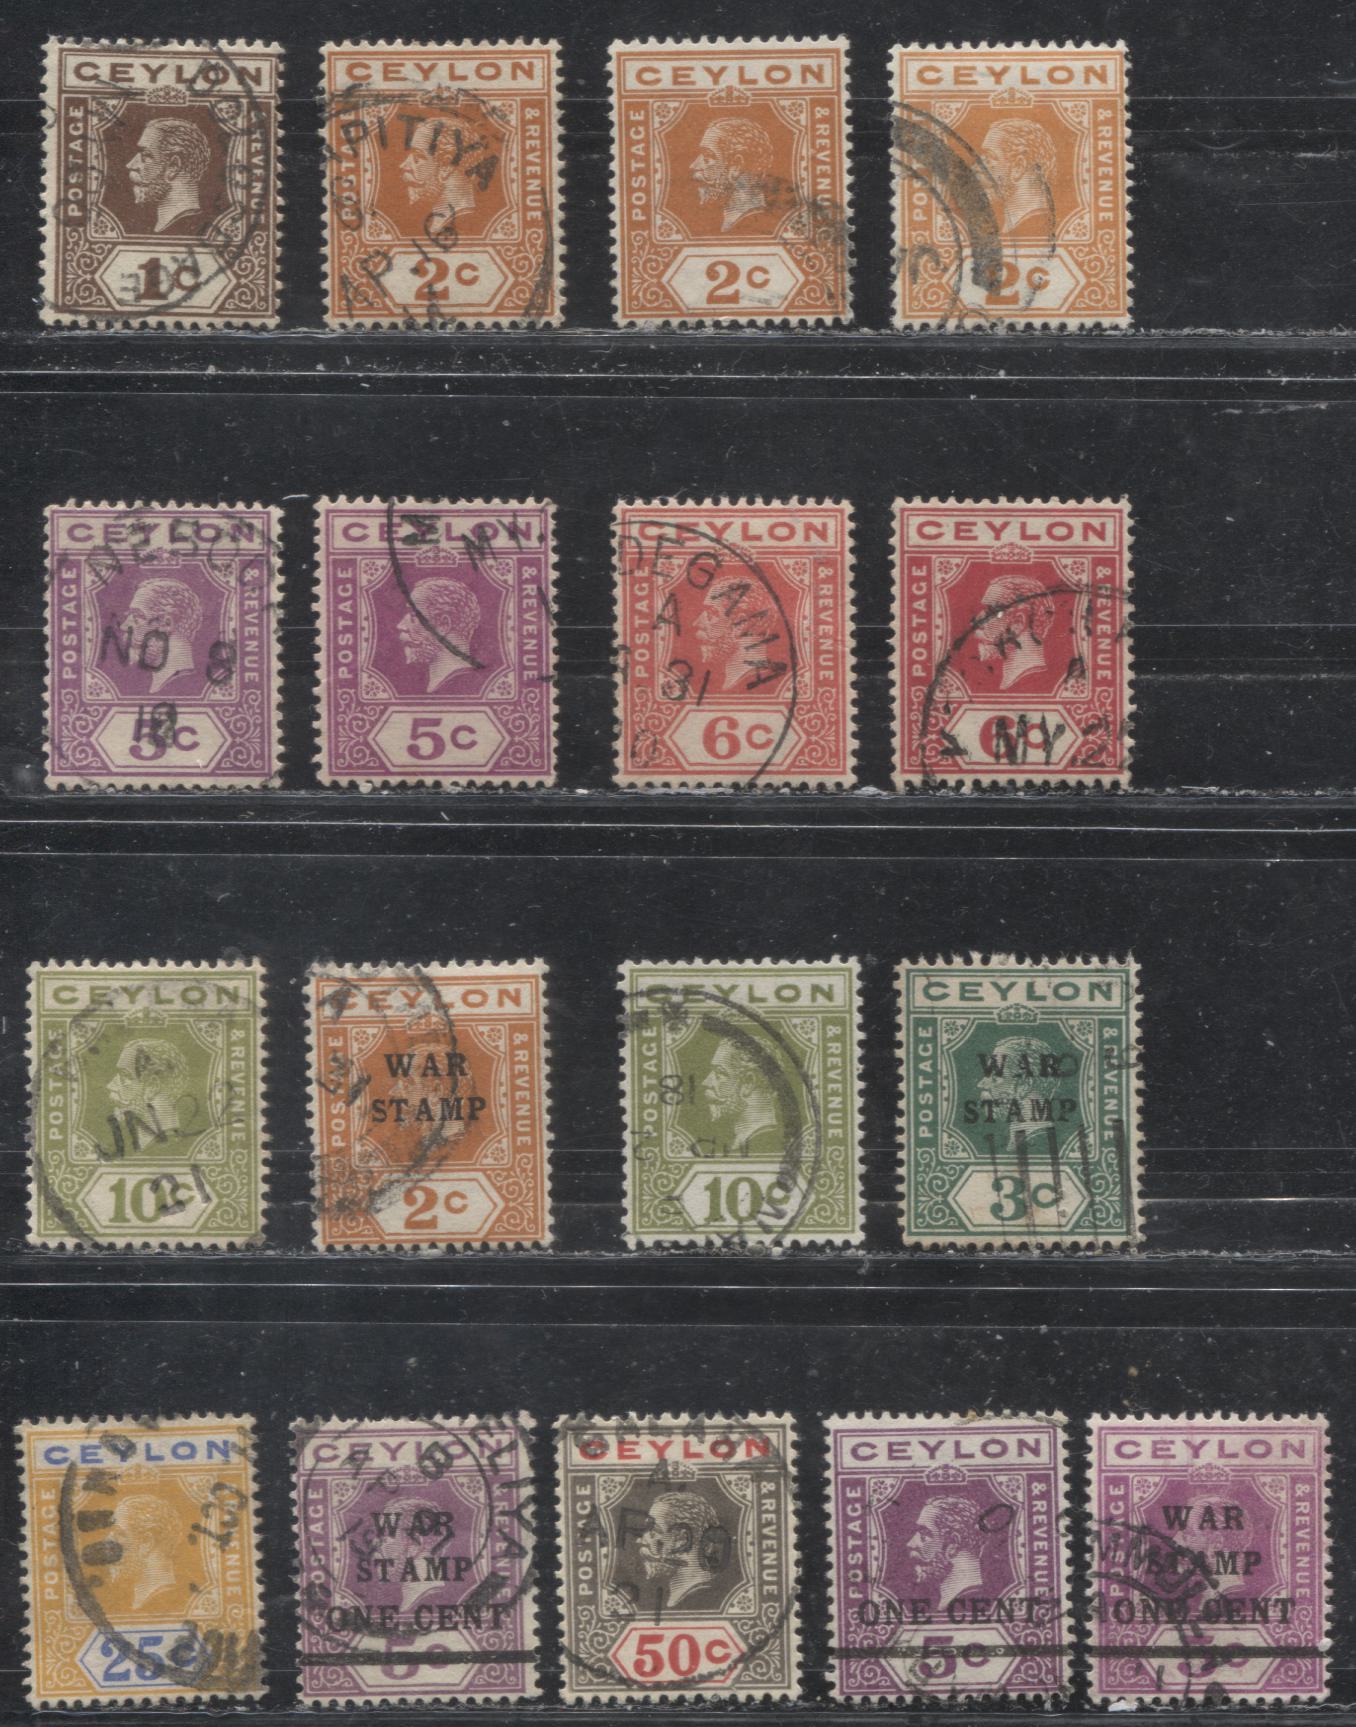 Lot 268 Ceylon SG#301/334 1c - 50c Brown - Grey Black & Carmine King George V, 1912-1925 Multiple Crown CA Imperium Keyplate Issue, Seventeen Fine & VF Used Examples